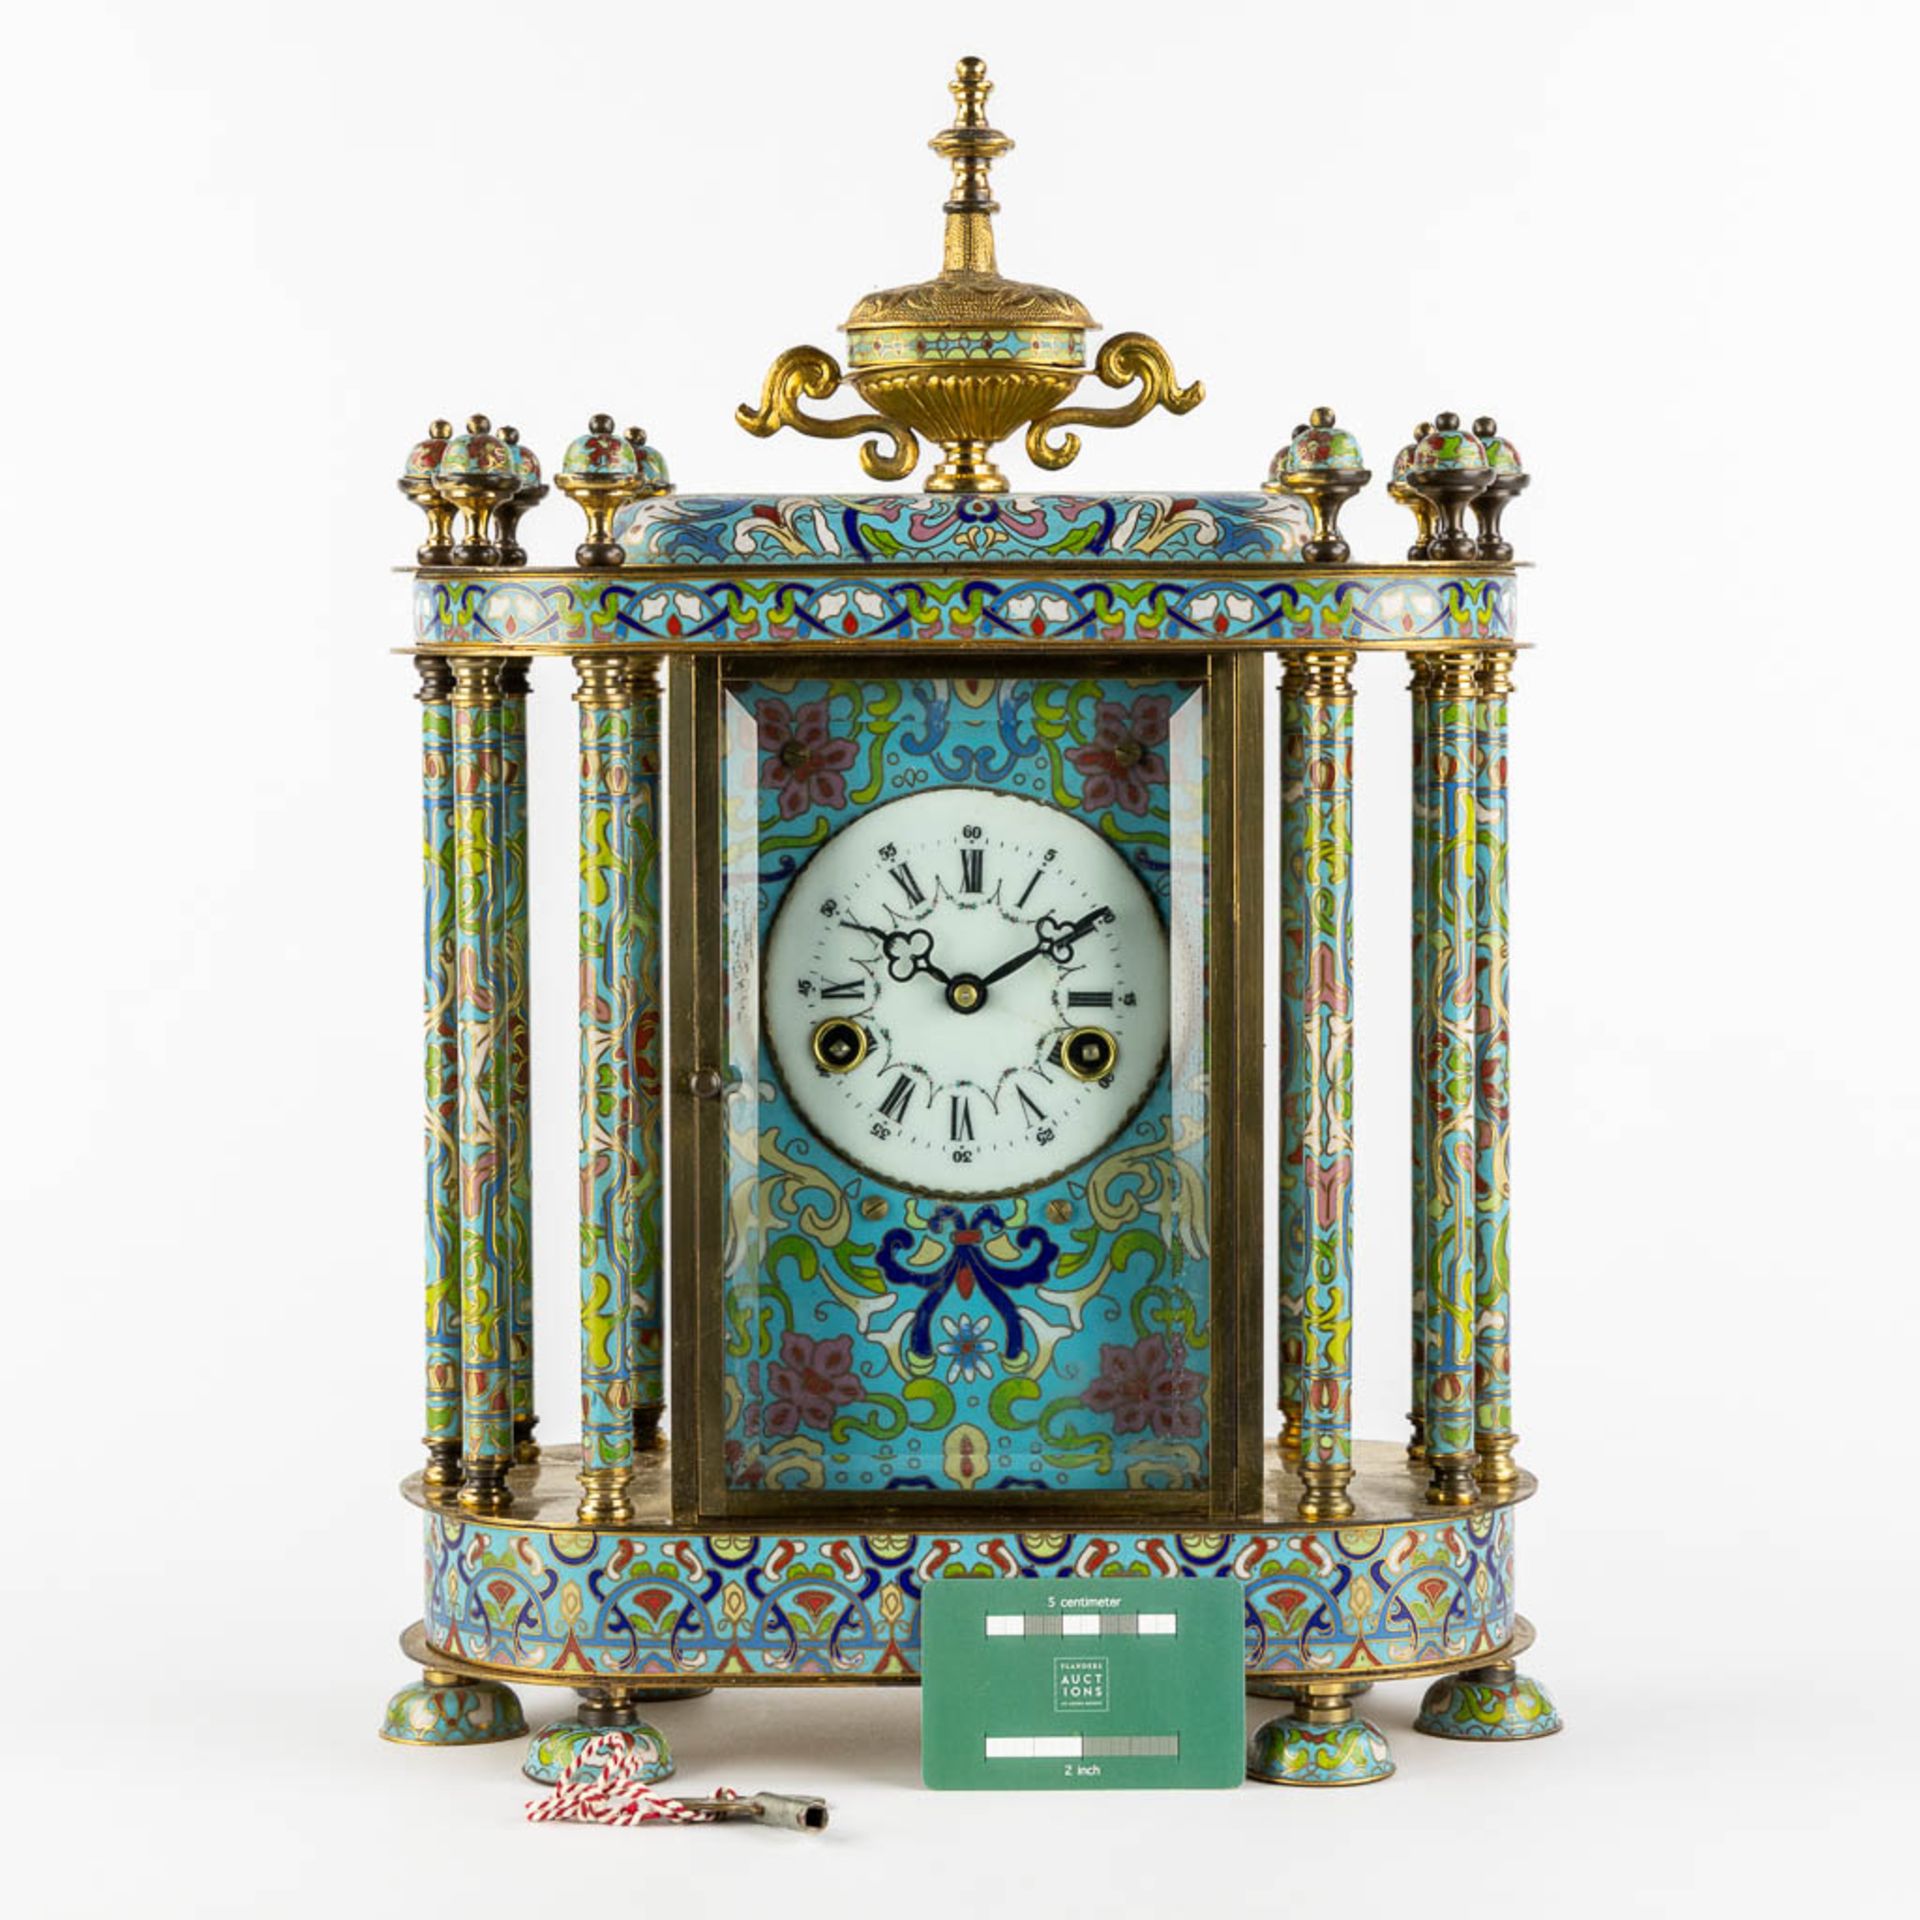 A decorative table clock, finished with cloisonné enamel. (L:15 x W:32 x H:46 cm) - Image 2 of 11